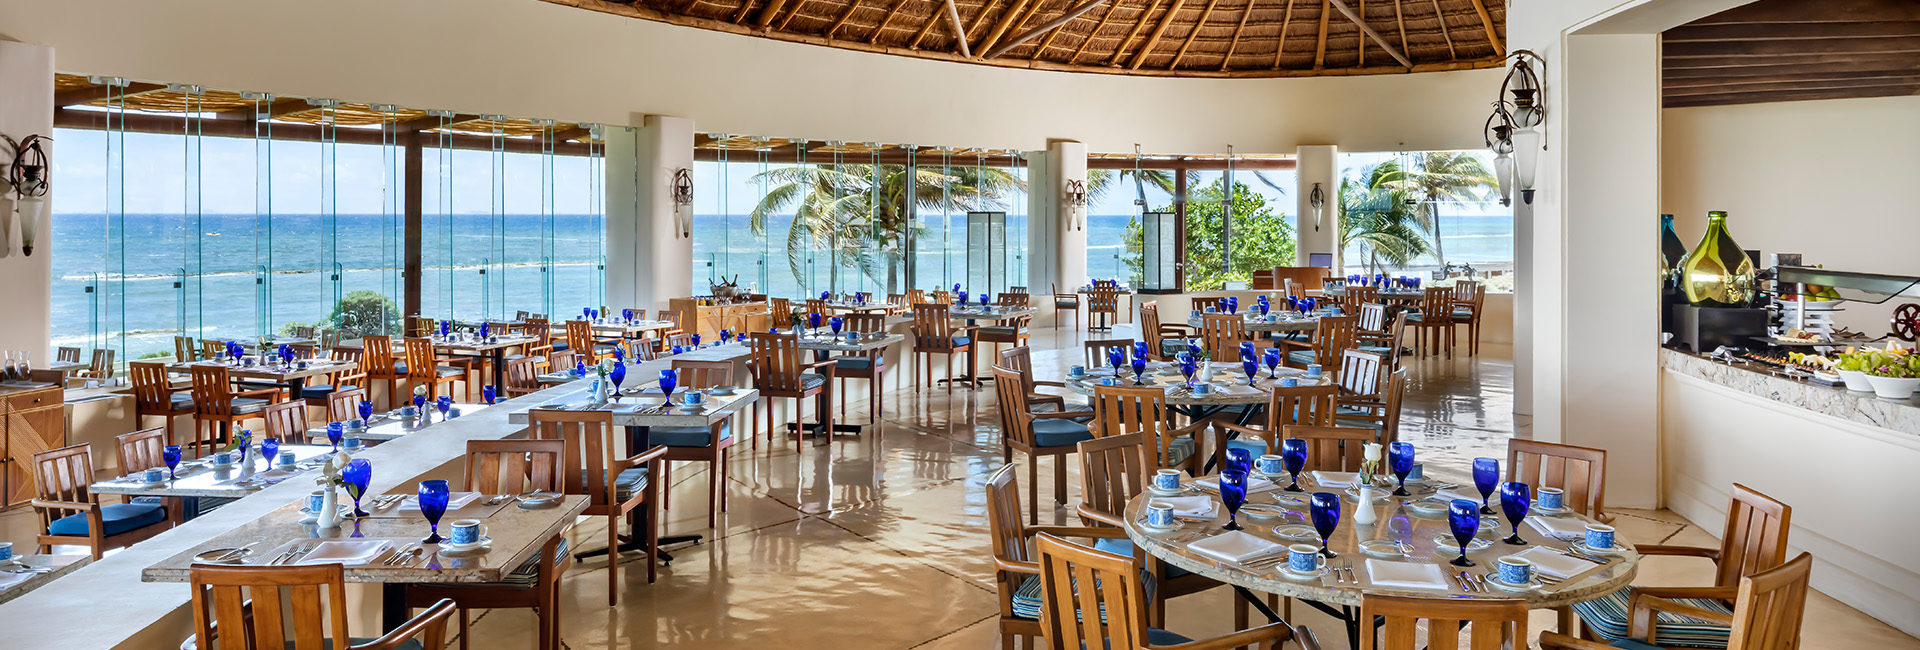 Azul Restaurant at Grand Velas Riviera Maya